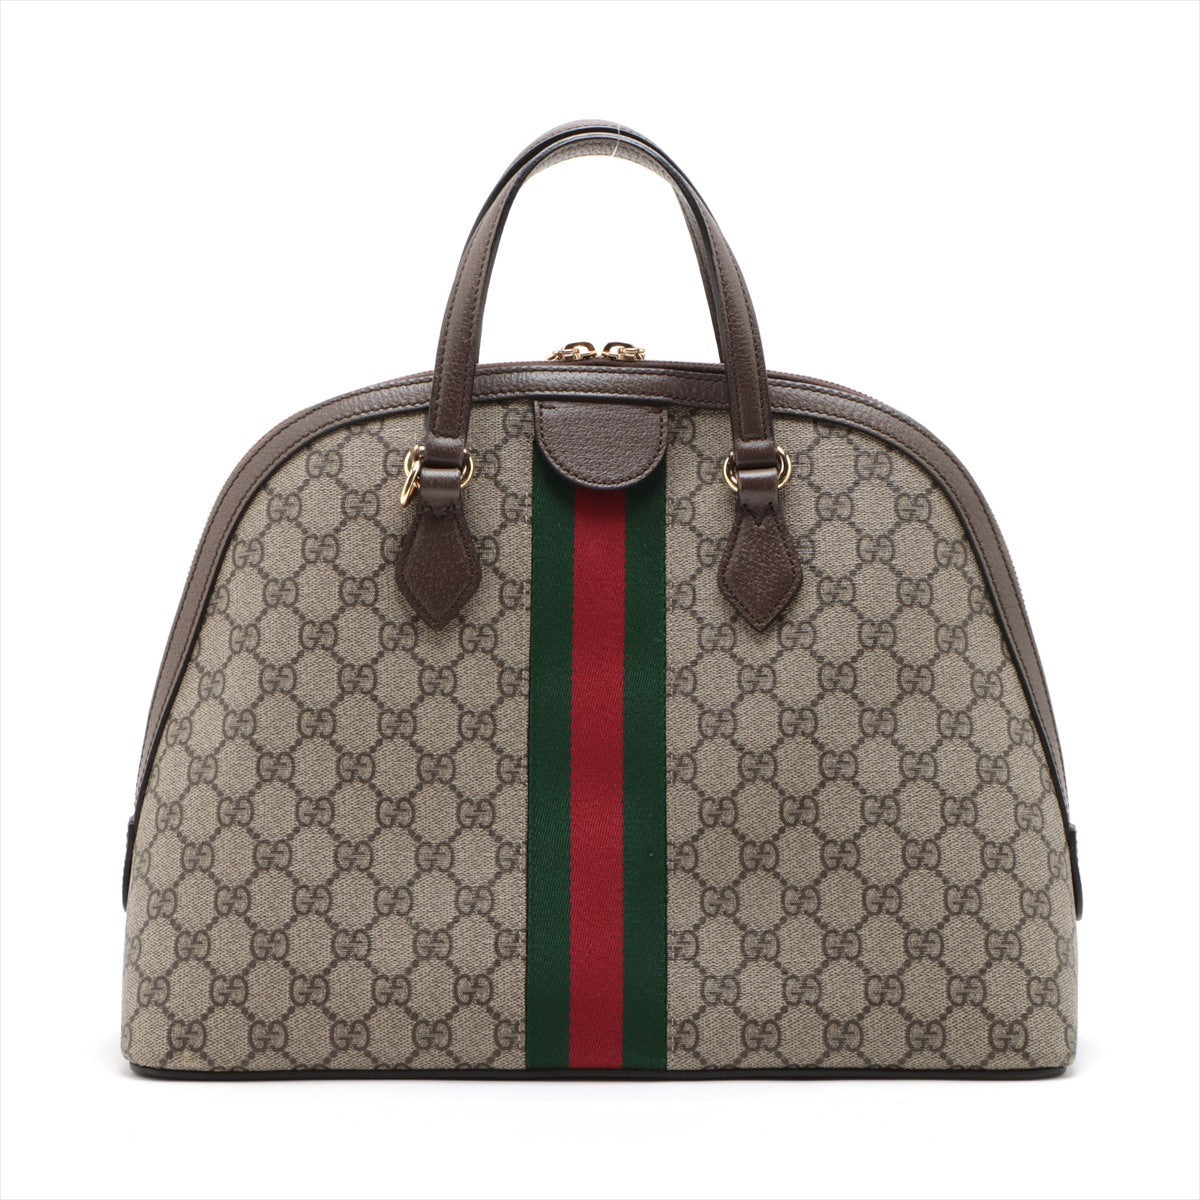 Gucci GG Supreme PVC & leather 2 Way Handbag Beige×Brown 524533